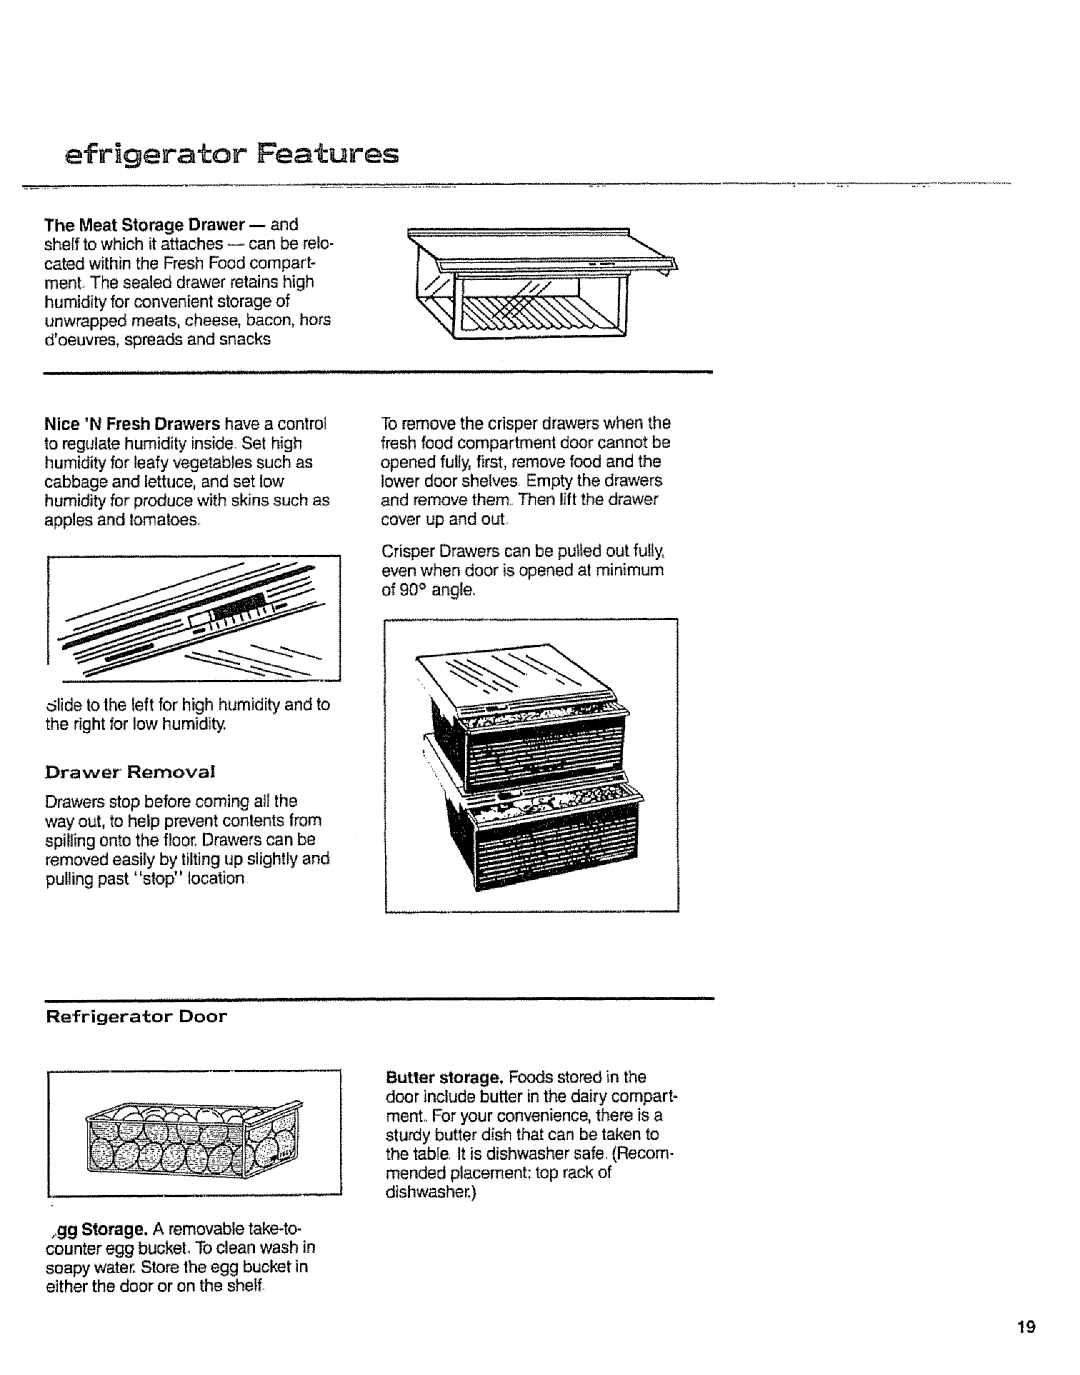 Sears 10062603 manual efrigerator Features, Drawer Removal, Refrigerator Door 